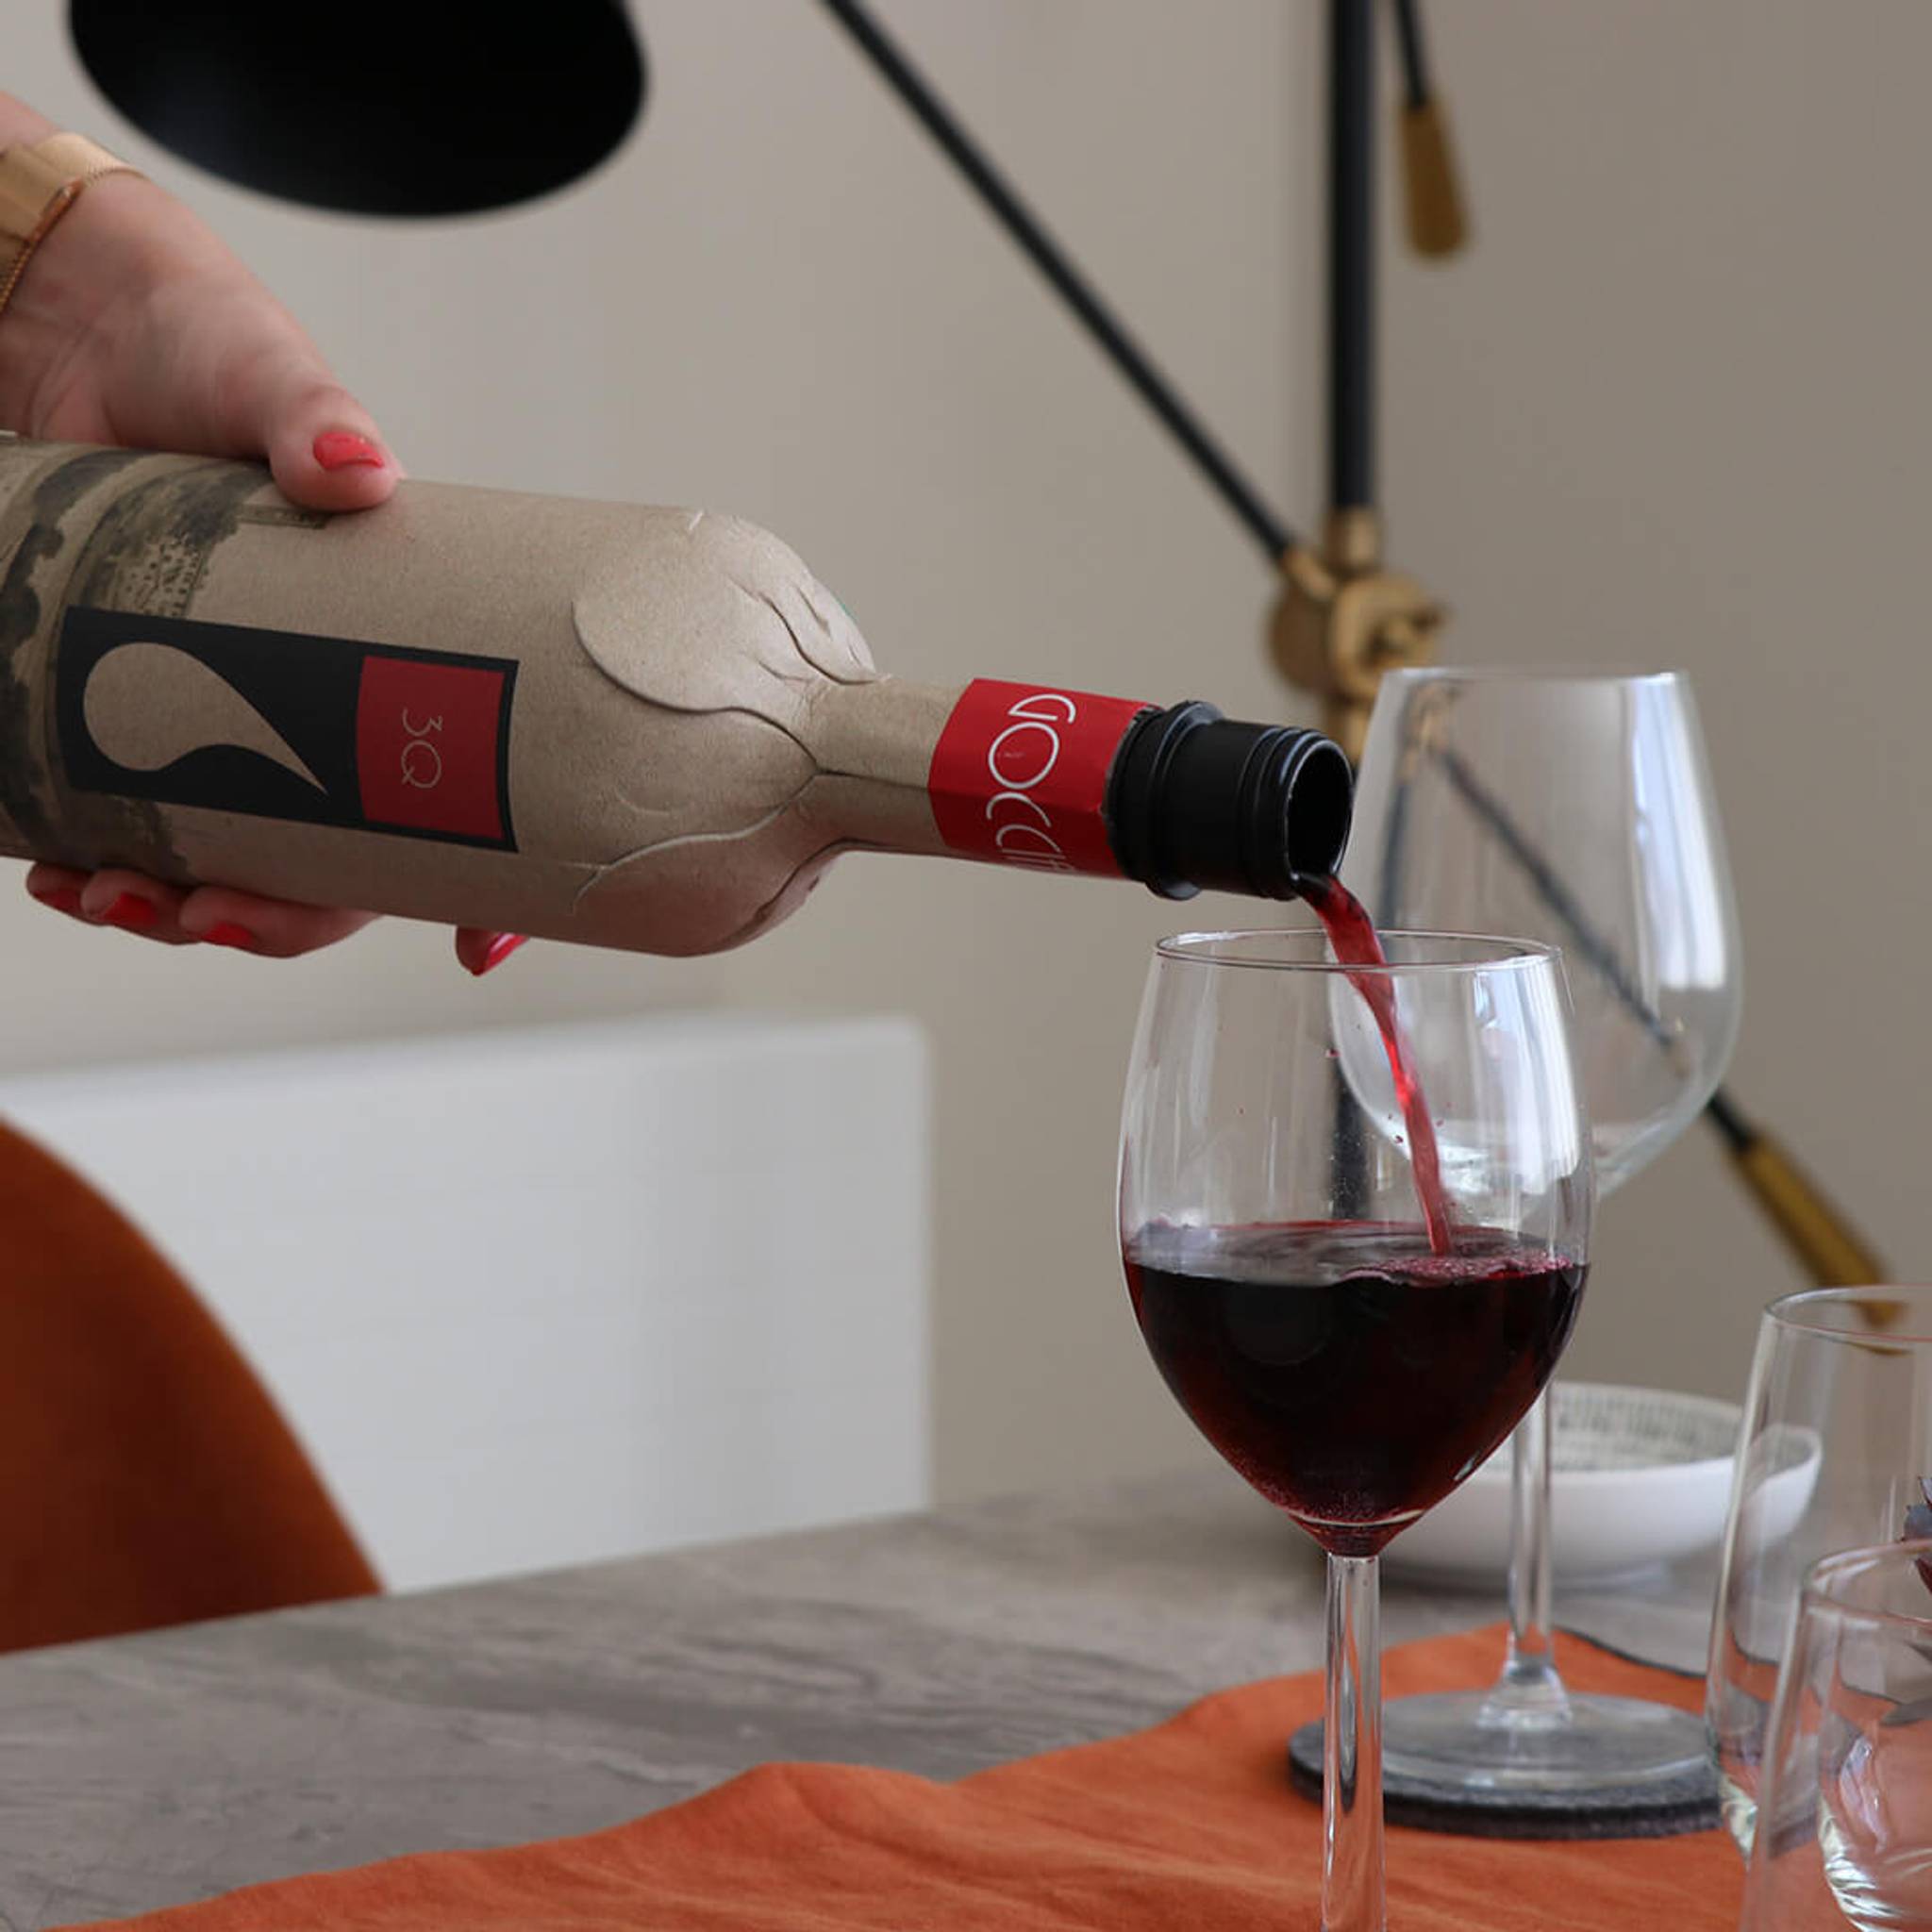 Paper wine bottle addresses eco packaging gripes